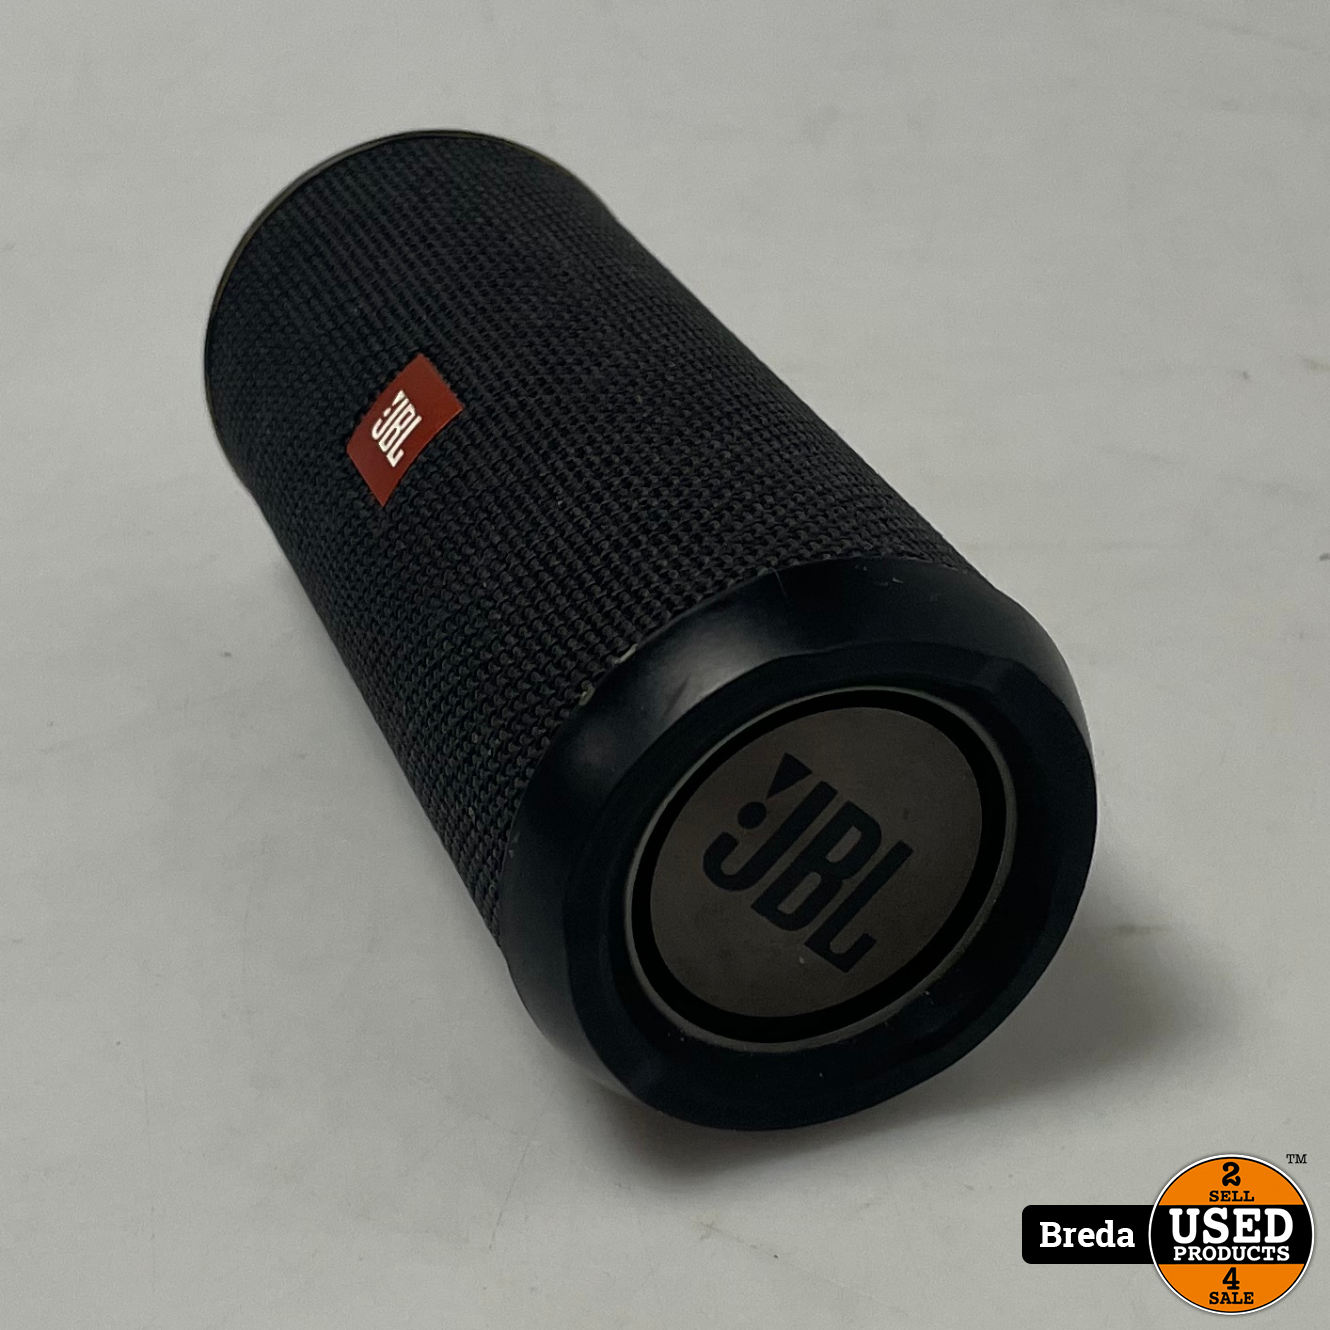 JBL Flip 3 speaker zwart | Gebruikte staat | Met garantie - Used Products Breda